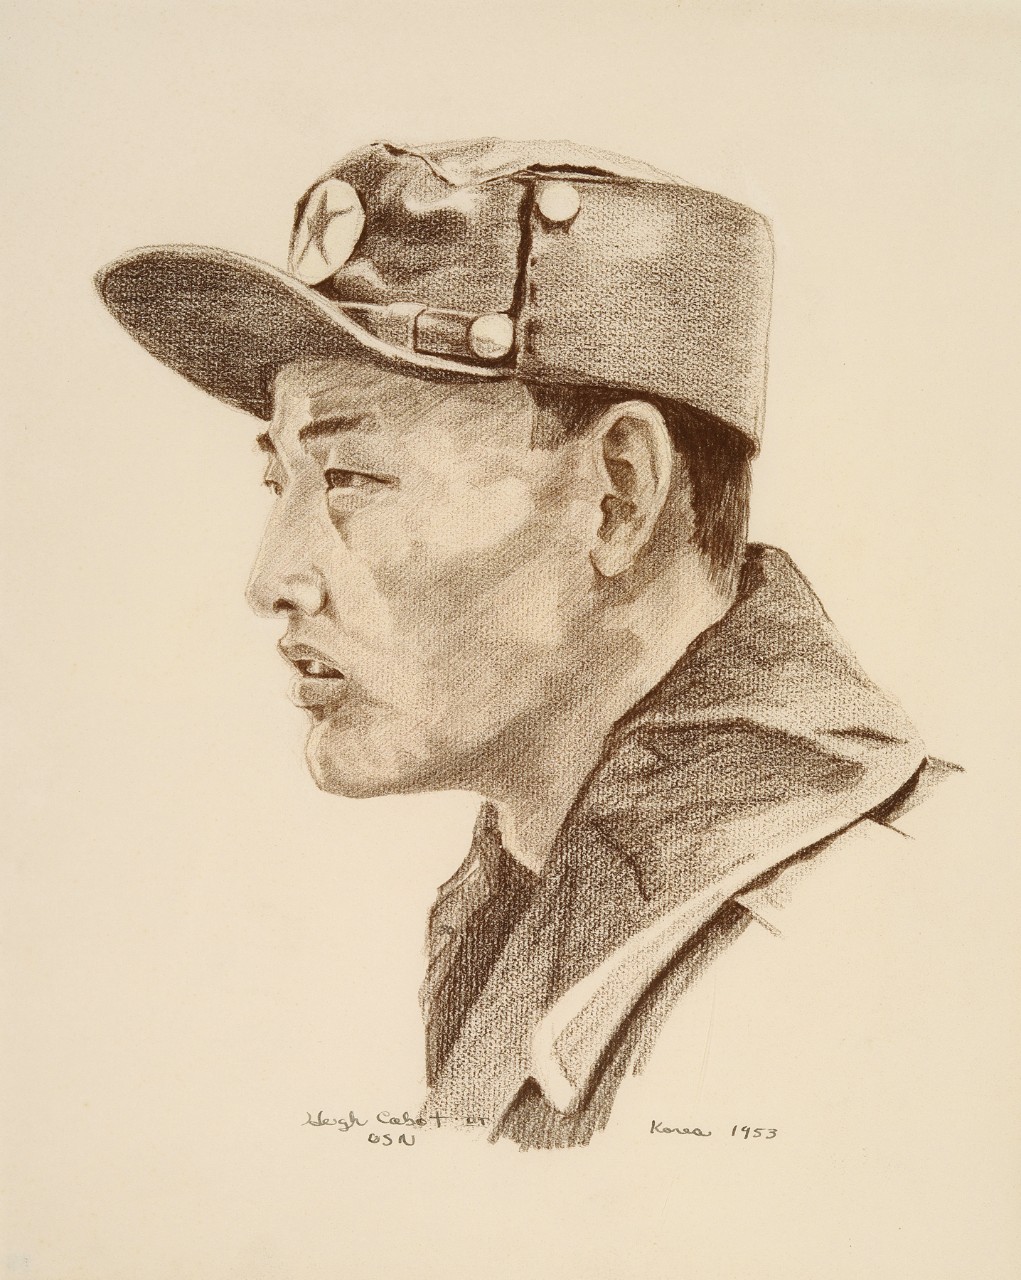 Portrait of a North Korean soldier